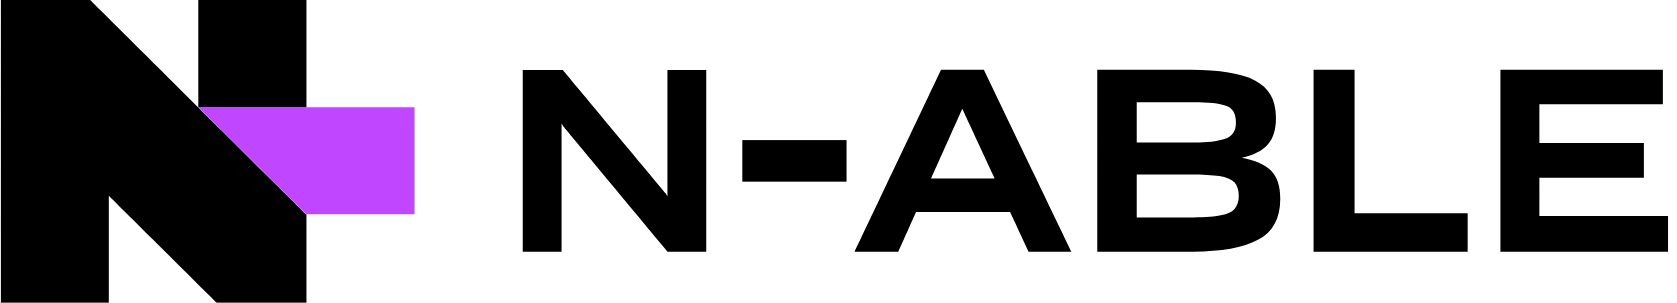 N-Able logo large (transparent PNG)